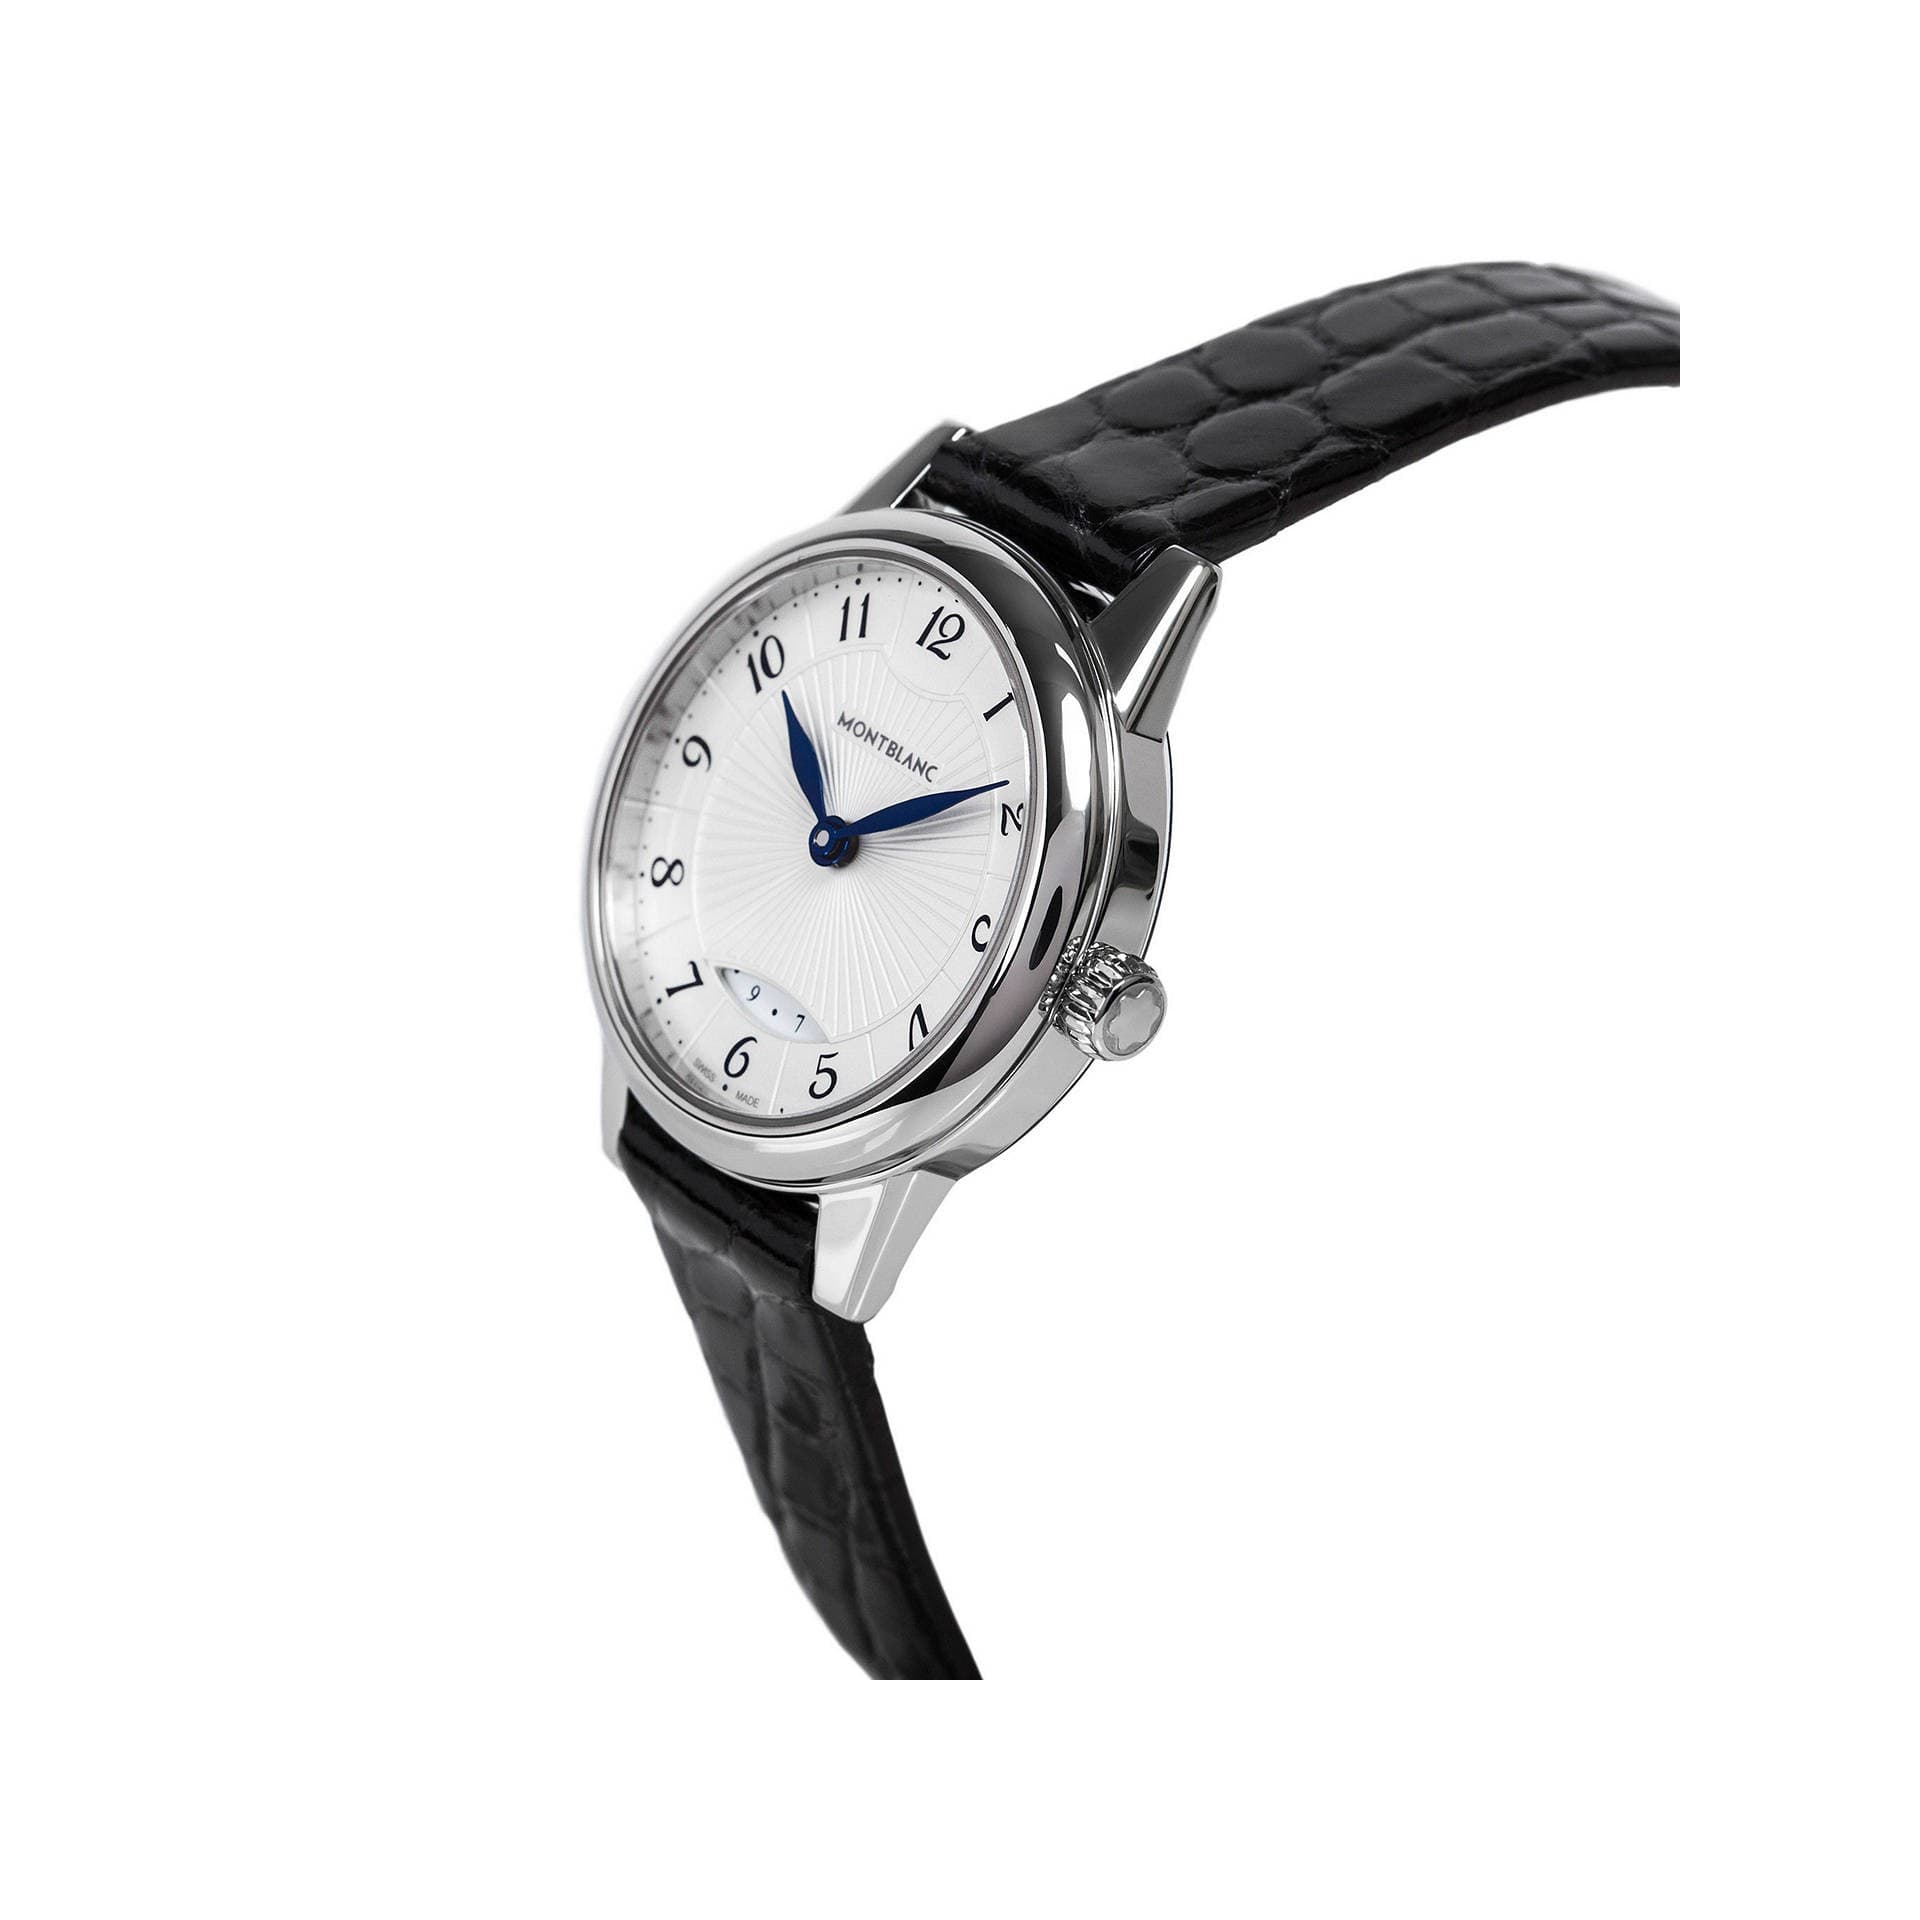 Relógio Montblanc Feminino Preto - Bohème Date - 111206